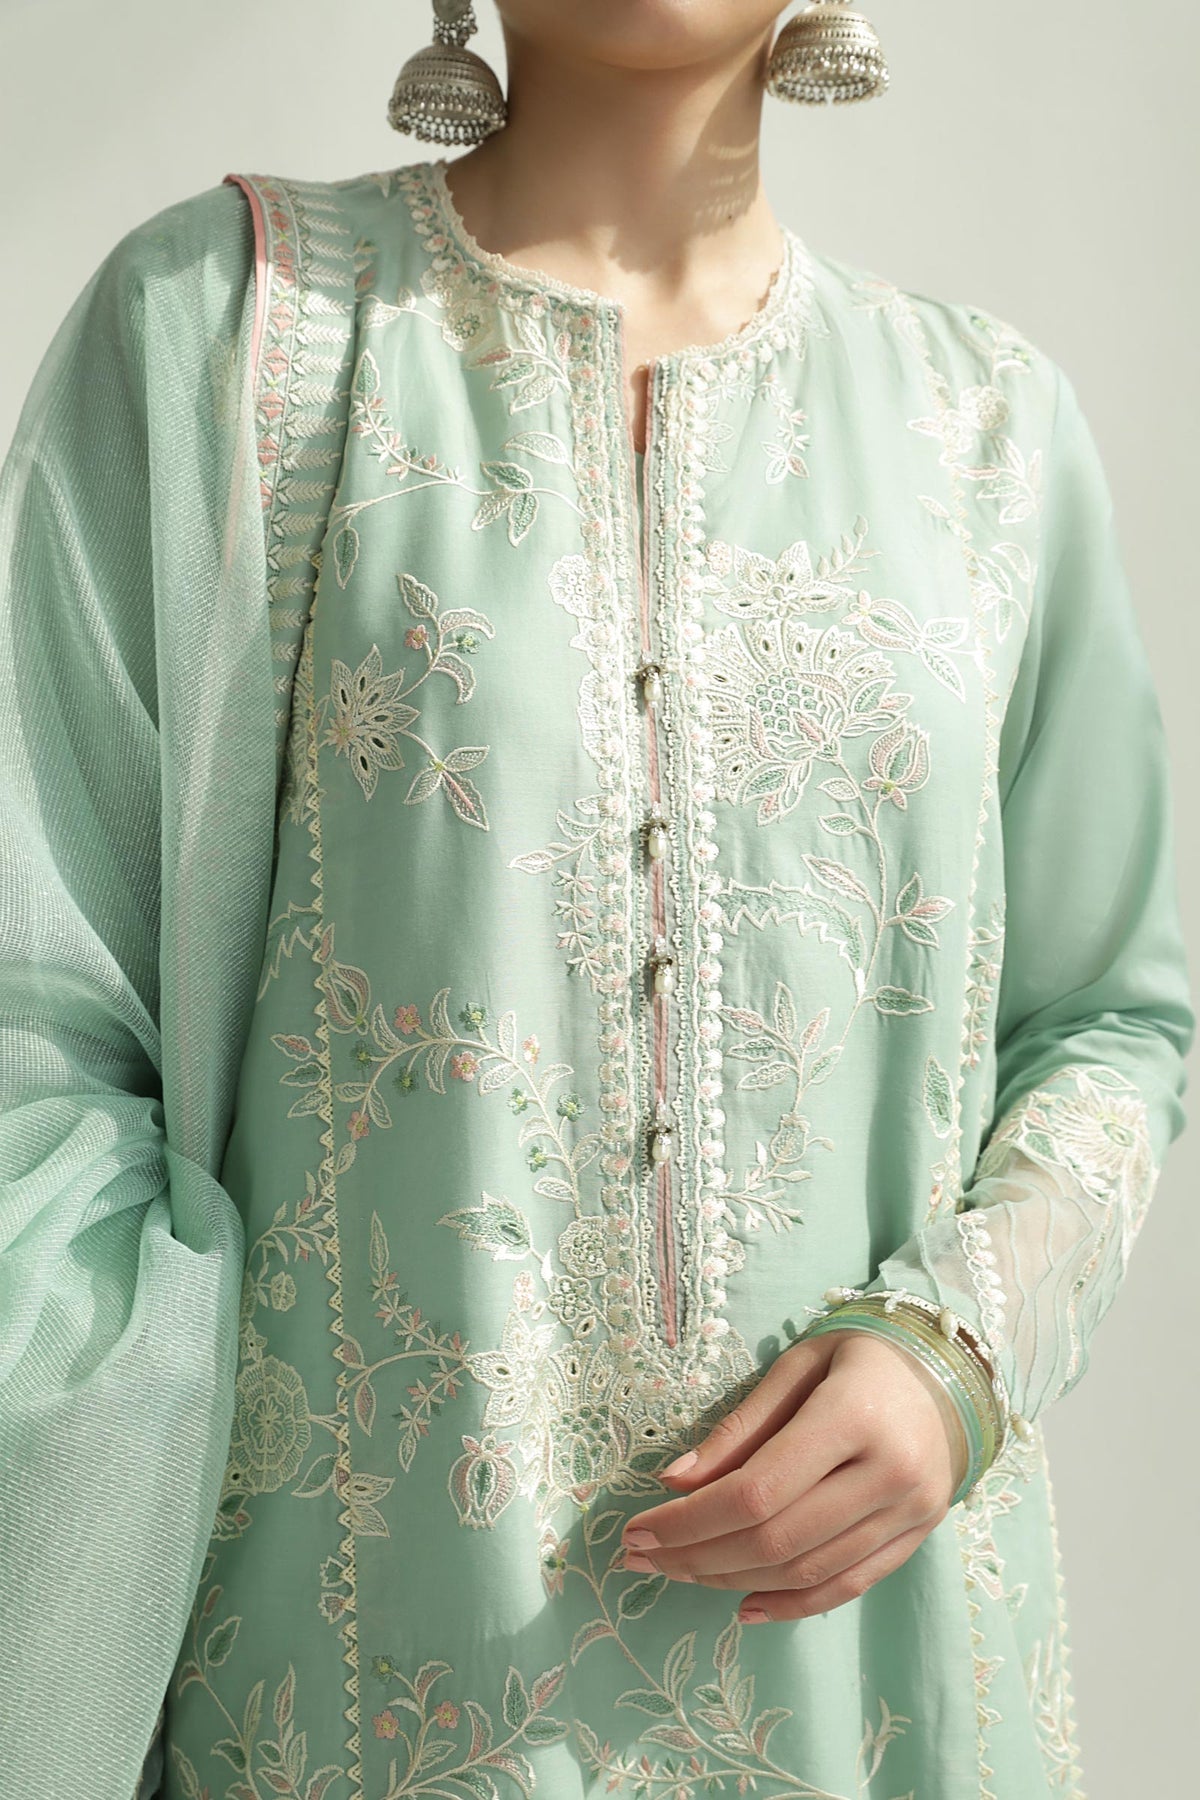 Amira 5B - Eid Embroidered Lawn 3P